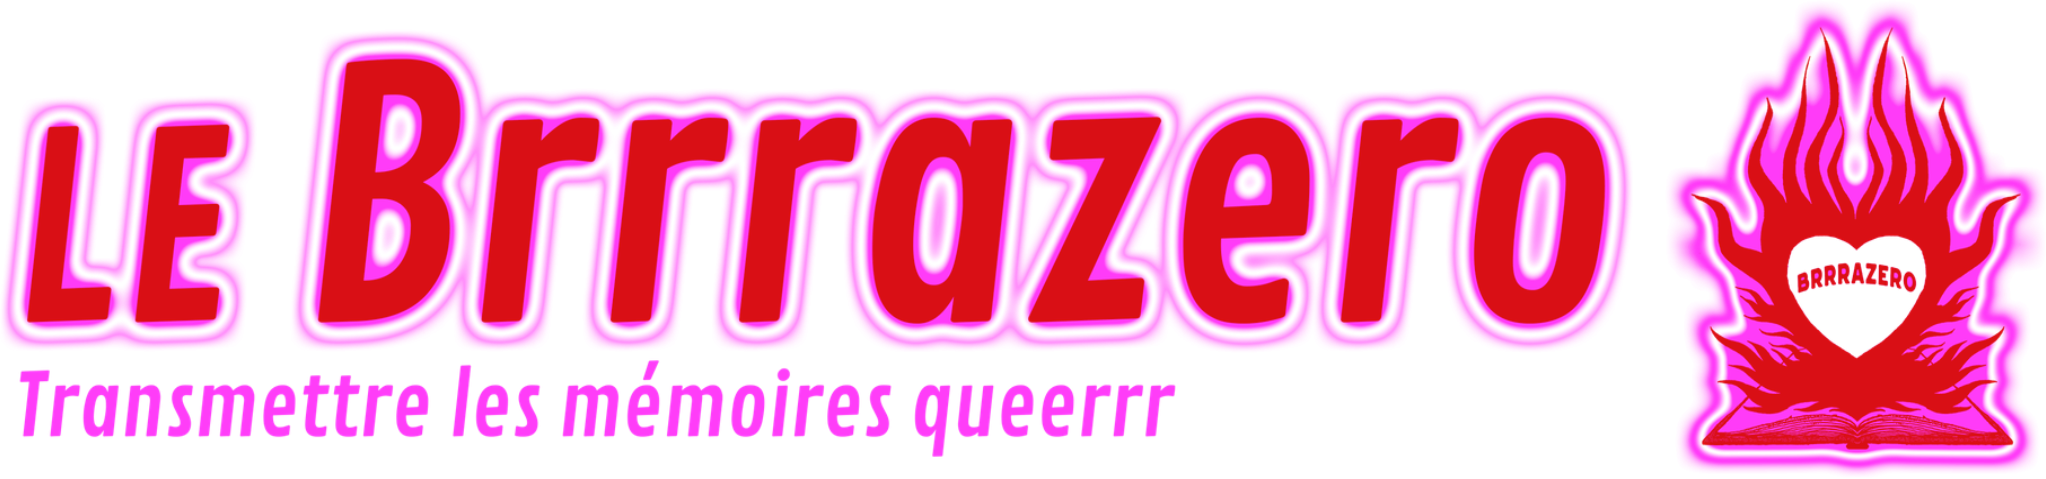 Le Brrrazero - Lyon